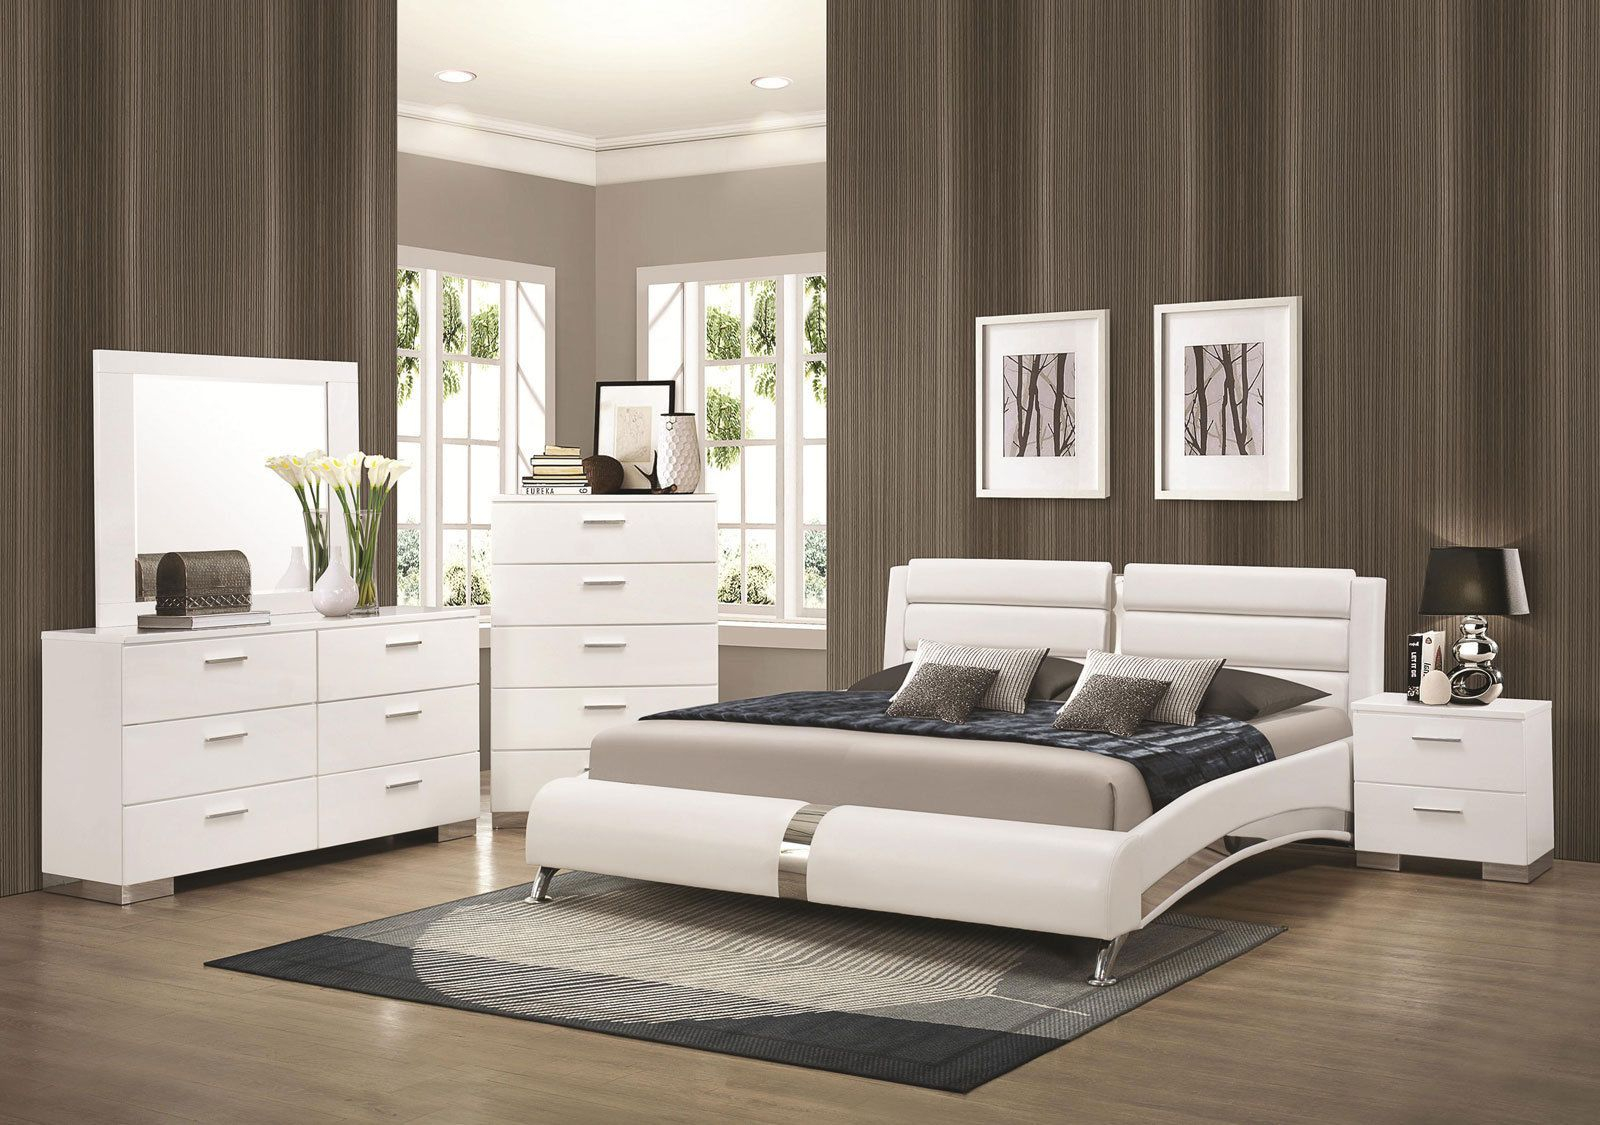 stanton bedroom furniture feedback